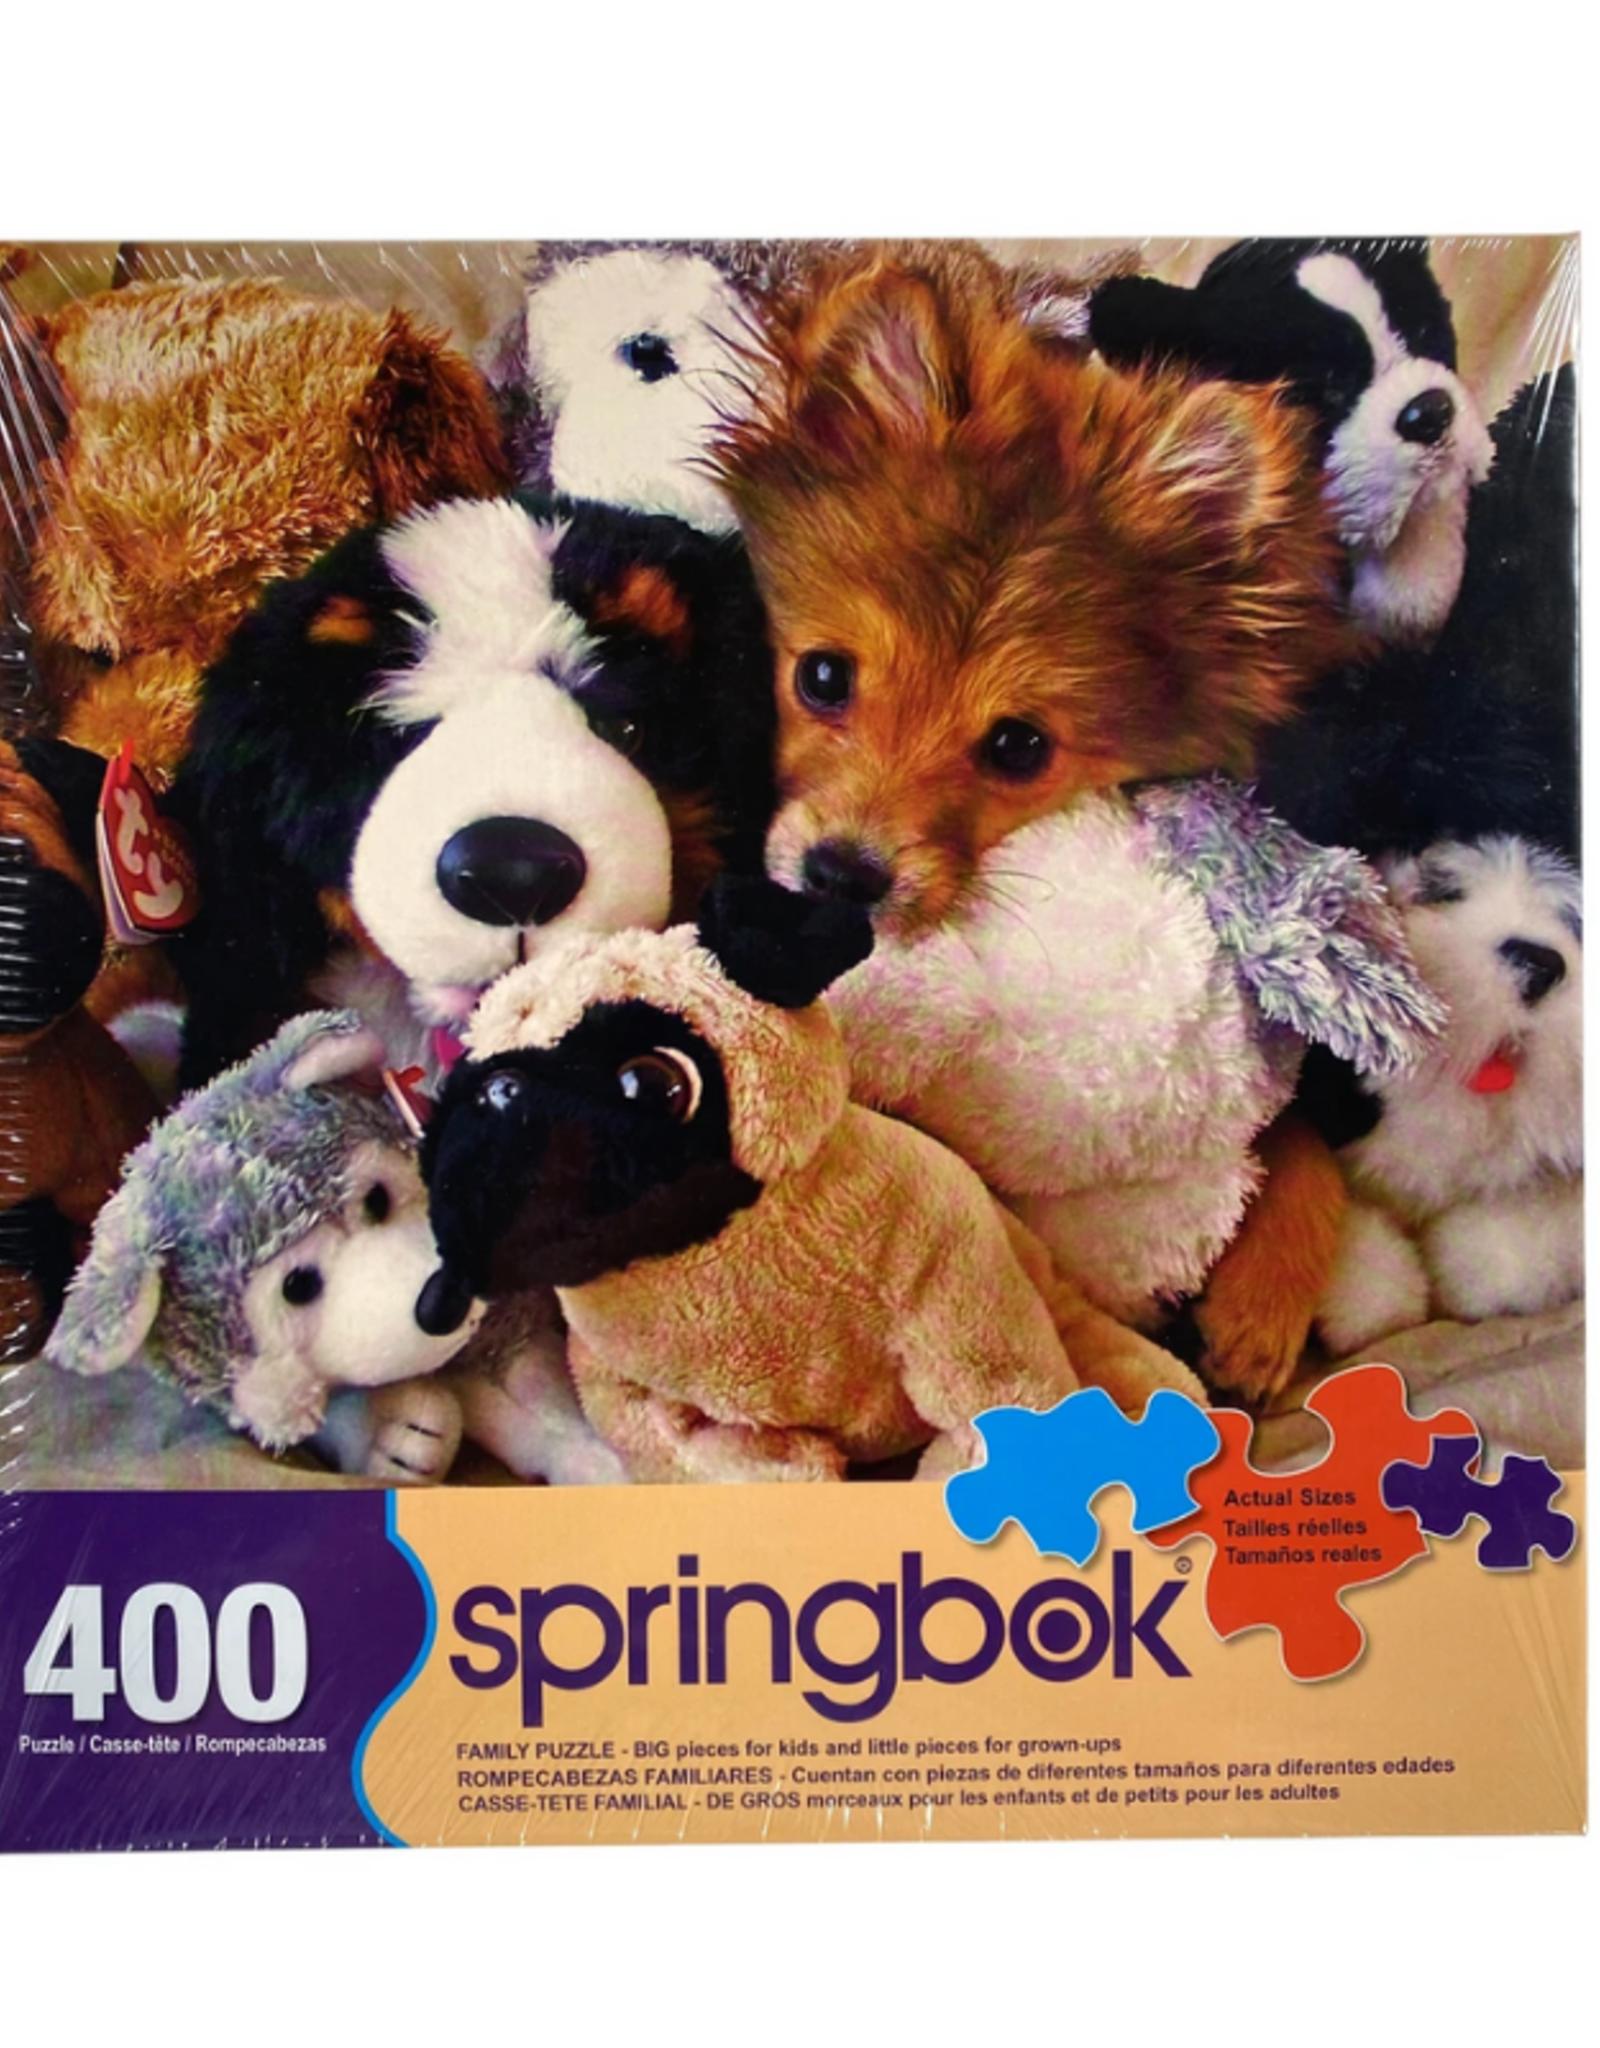 Springbok Playtime Puppies (400pc)